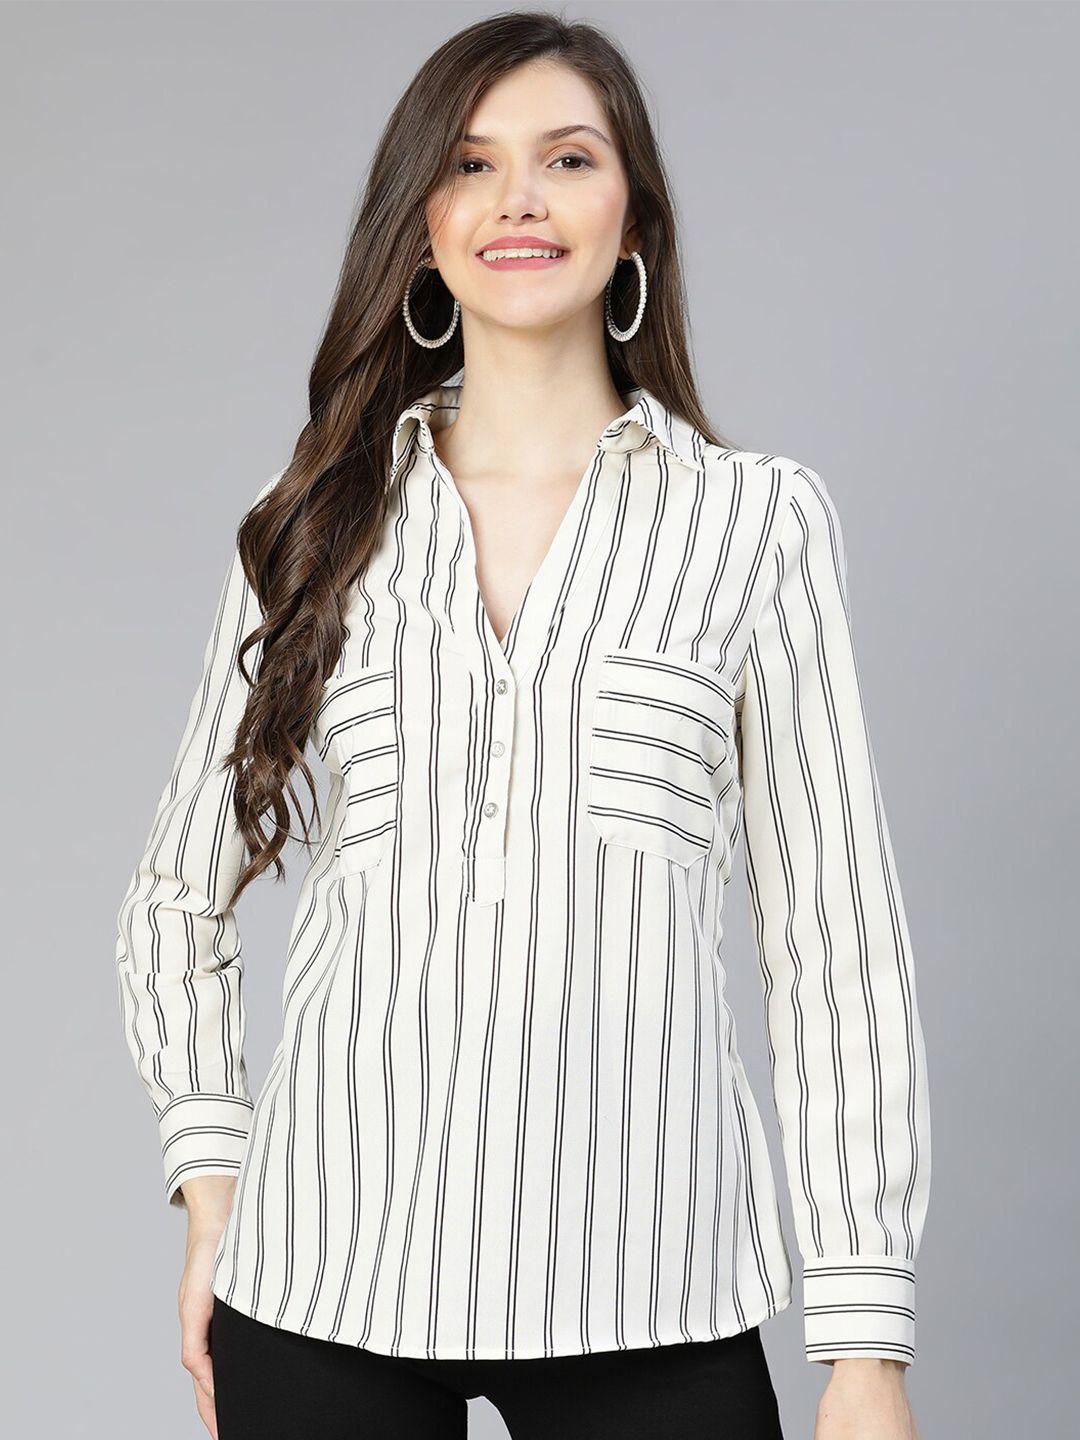 oxolloxo women white & black striped shirt style top